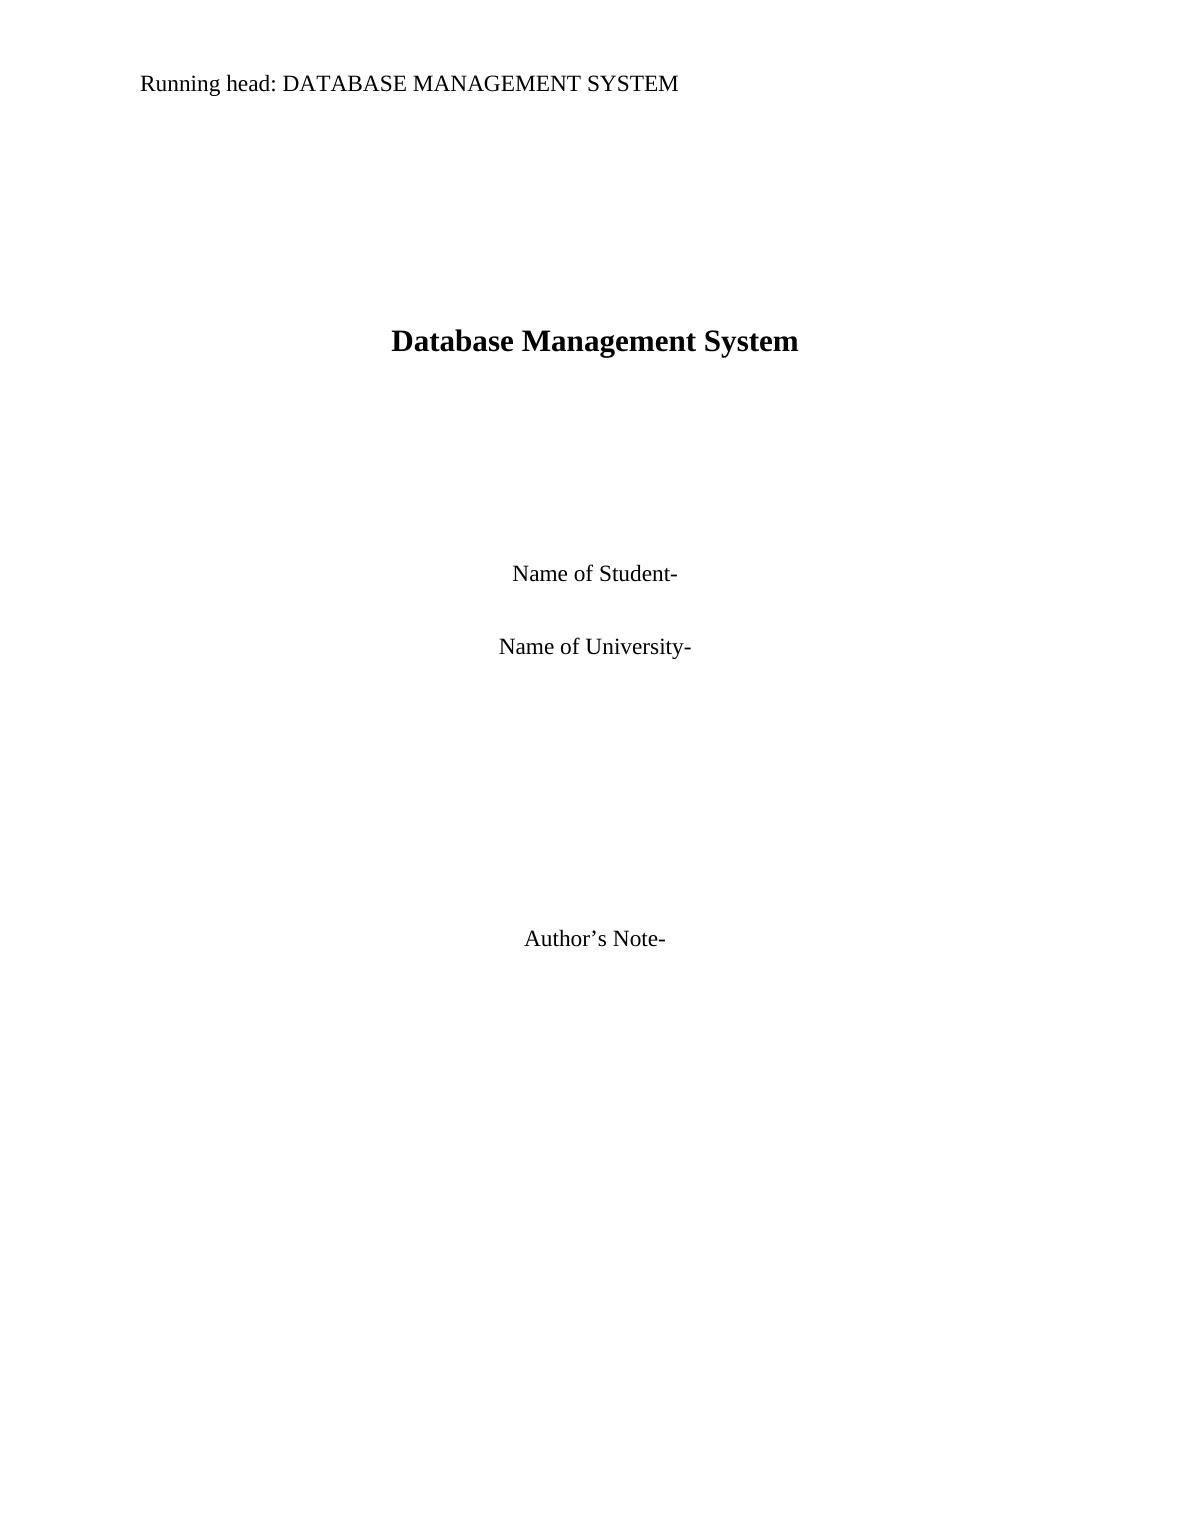 Database Management System Case Study_1